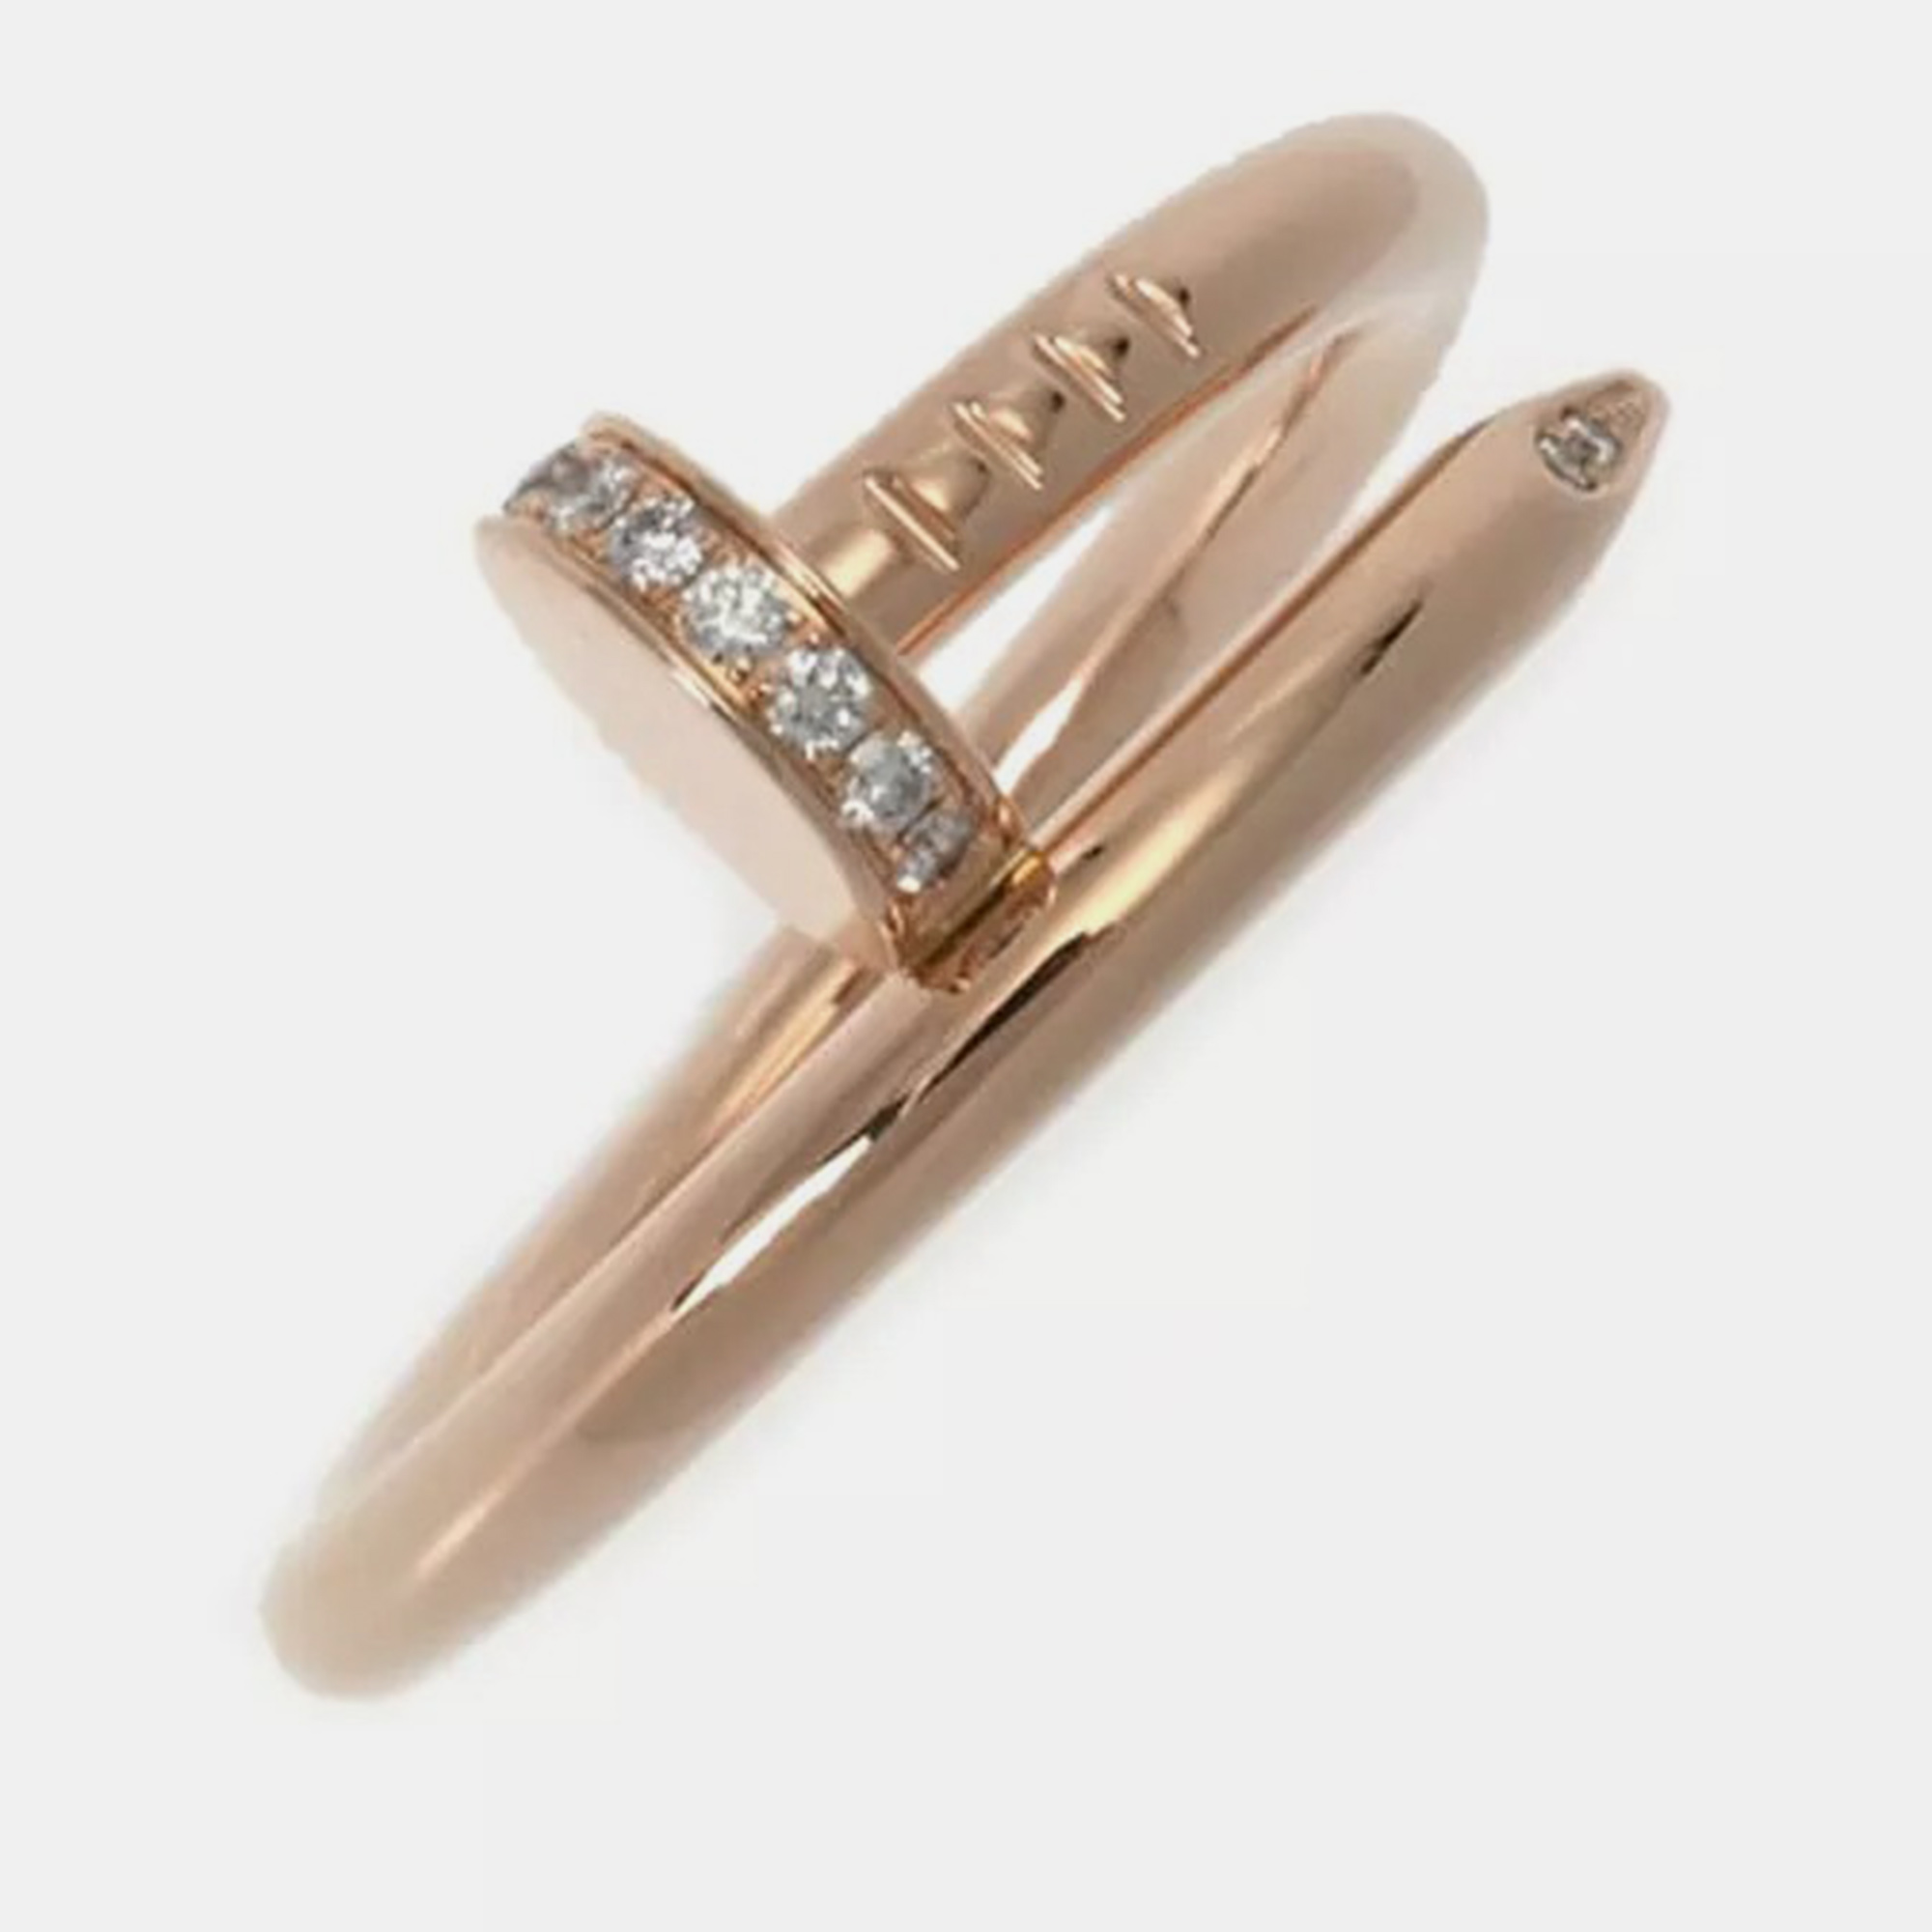 Cartier 18k pink gold juste un clou diamond ring size 58